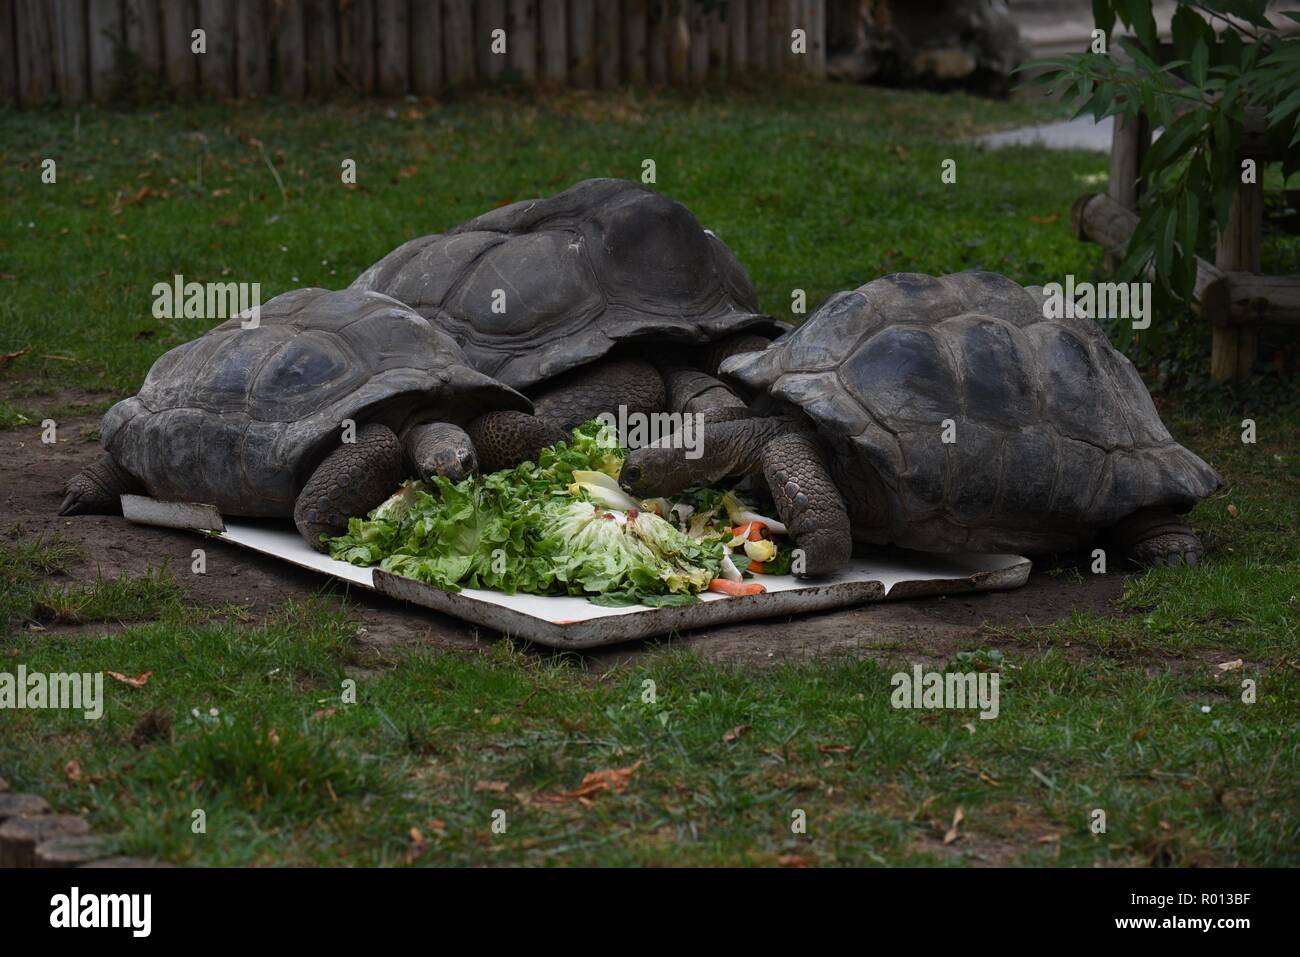 October 26, 2018 - Paris, France: Turtles eat salads at the zoo of the French National Museum of Natural History. Des tortues geantes des Seychelles mangent leur repas, de la salade, a la menagerie du Jardin des Plantes. *** FRANCE OUT / NO SALES TO FRENCH MEDIA *** Stock Photo